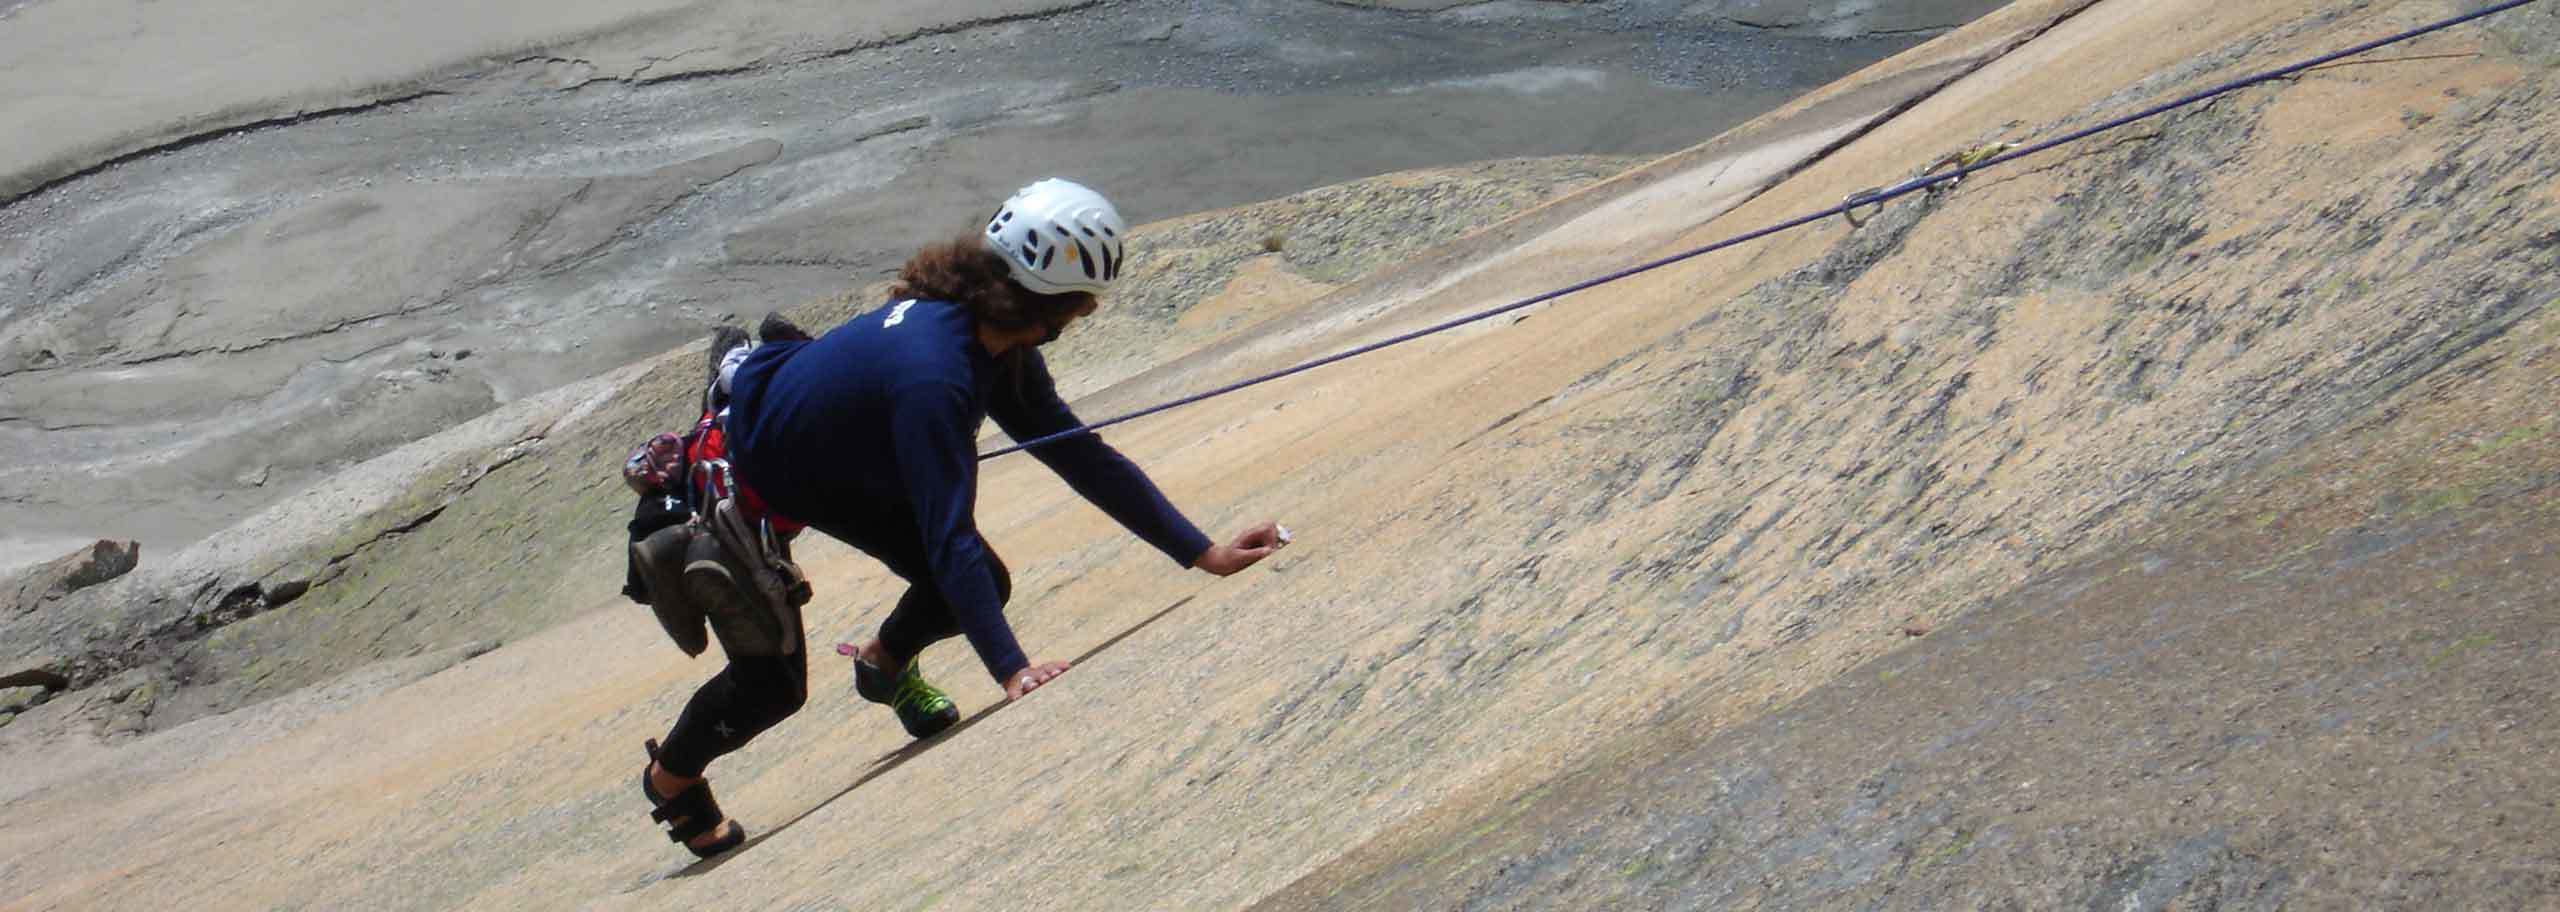 Rock Climbing in Livigno, Trad and Sport Climbing